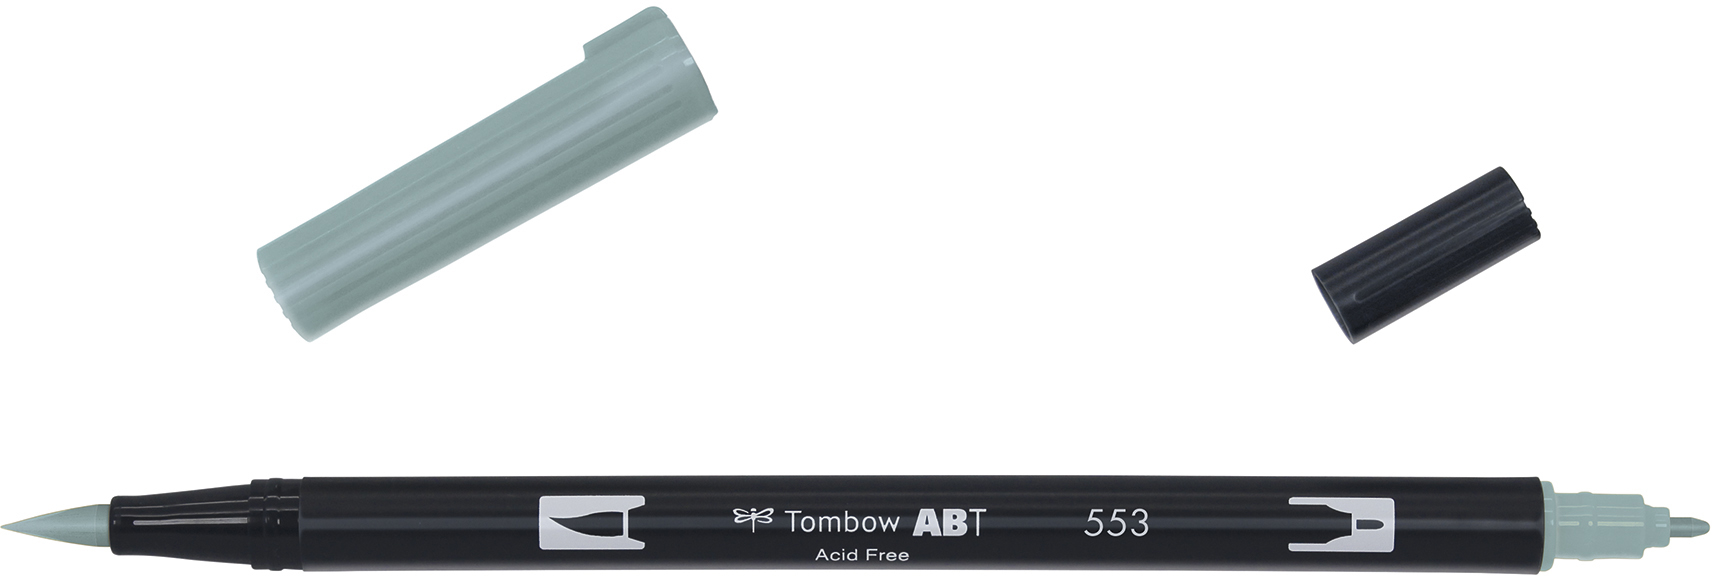 TOMBOW Dual Brush Pen ABT 553 mist purple